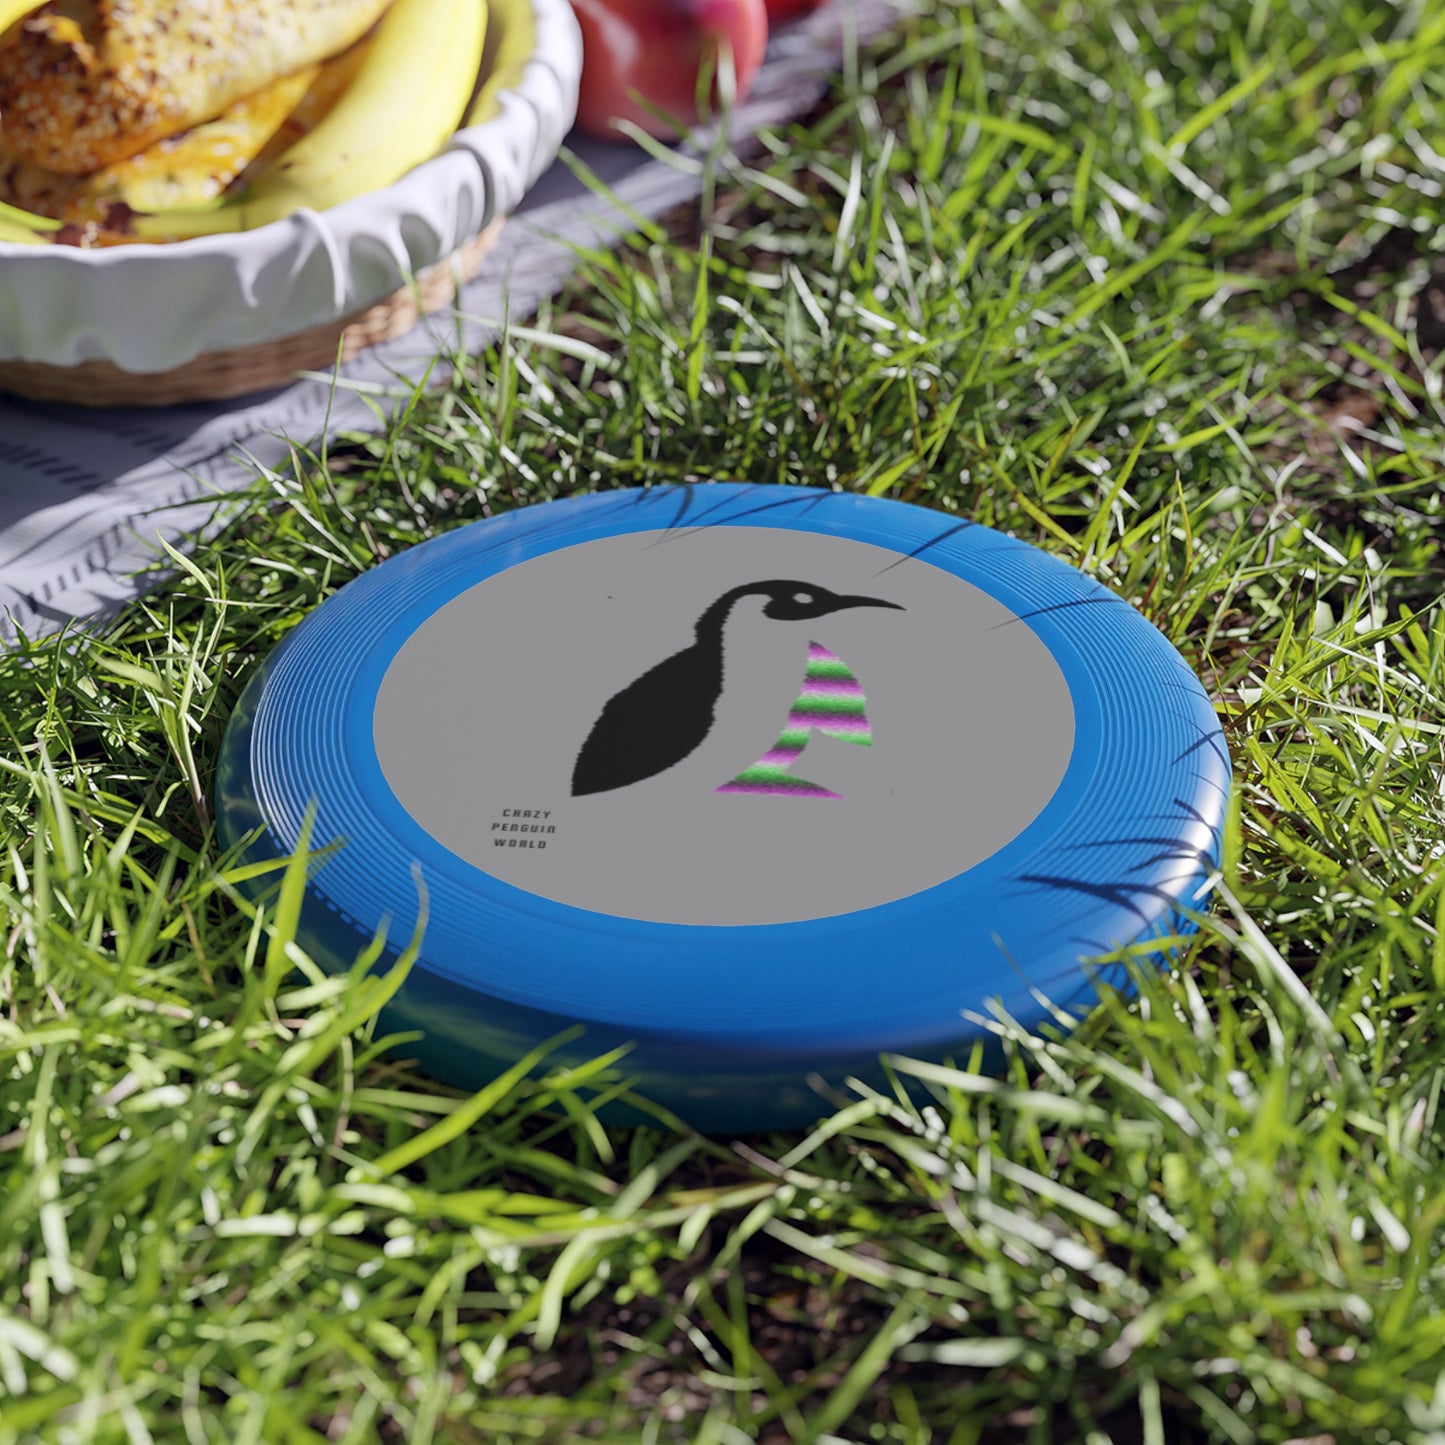 Frisbee: Crazy Penguin World Logo Grey